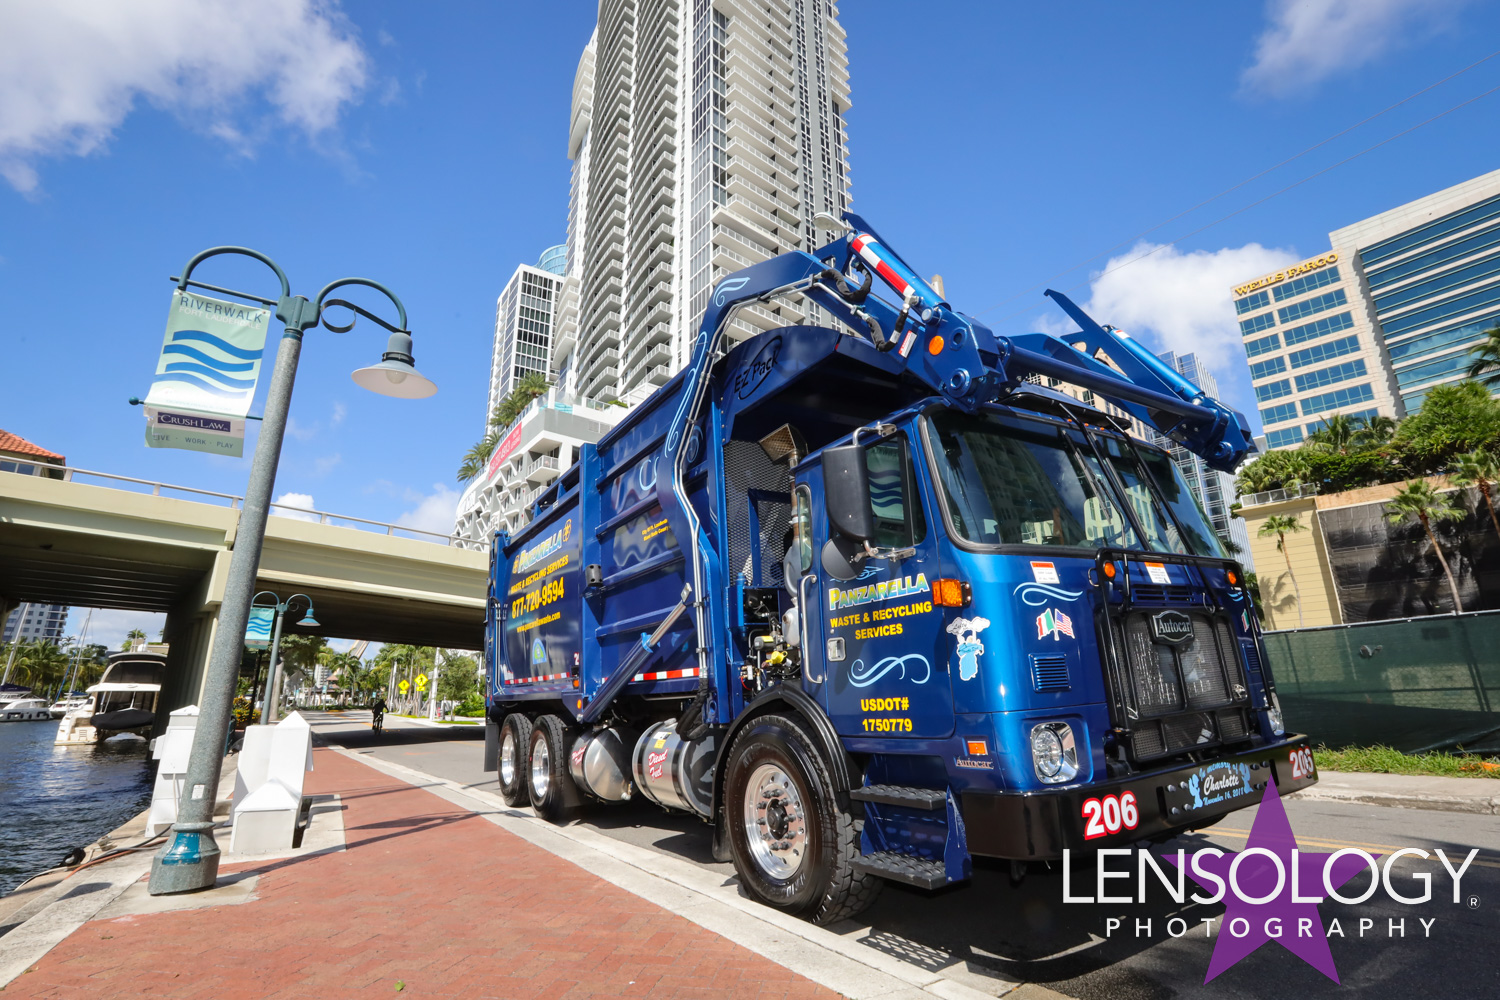 LENSOLOGY.NET - Garbage Truck shoot for Autocar Calendar 2022, ft Lauderdale, FL.
Email: info@lensology.net
www.lensology.net